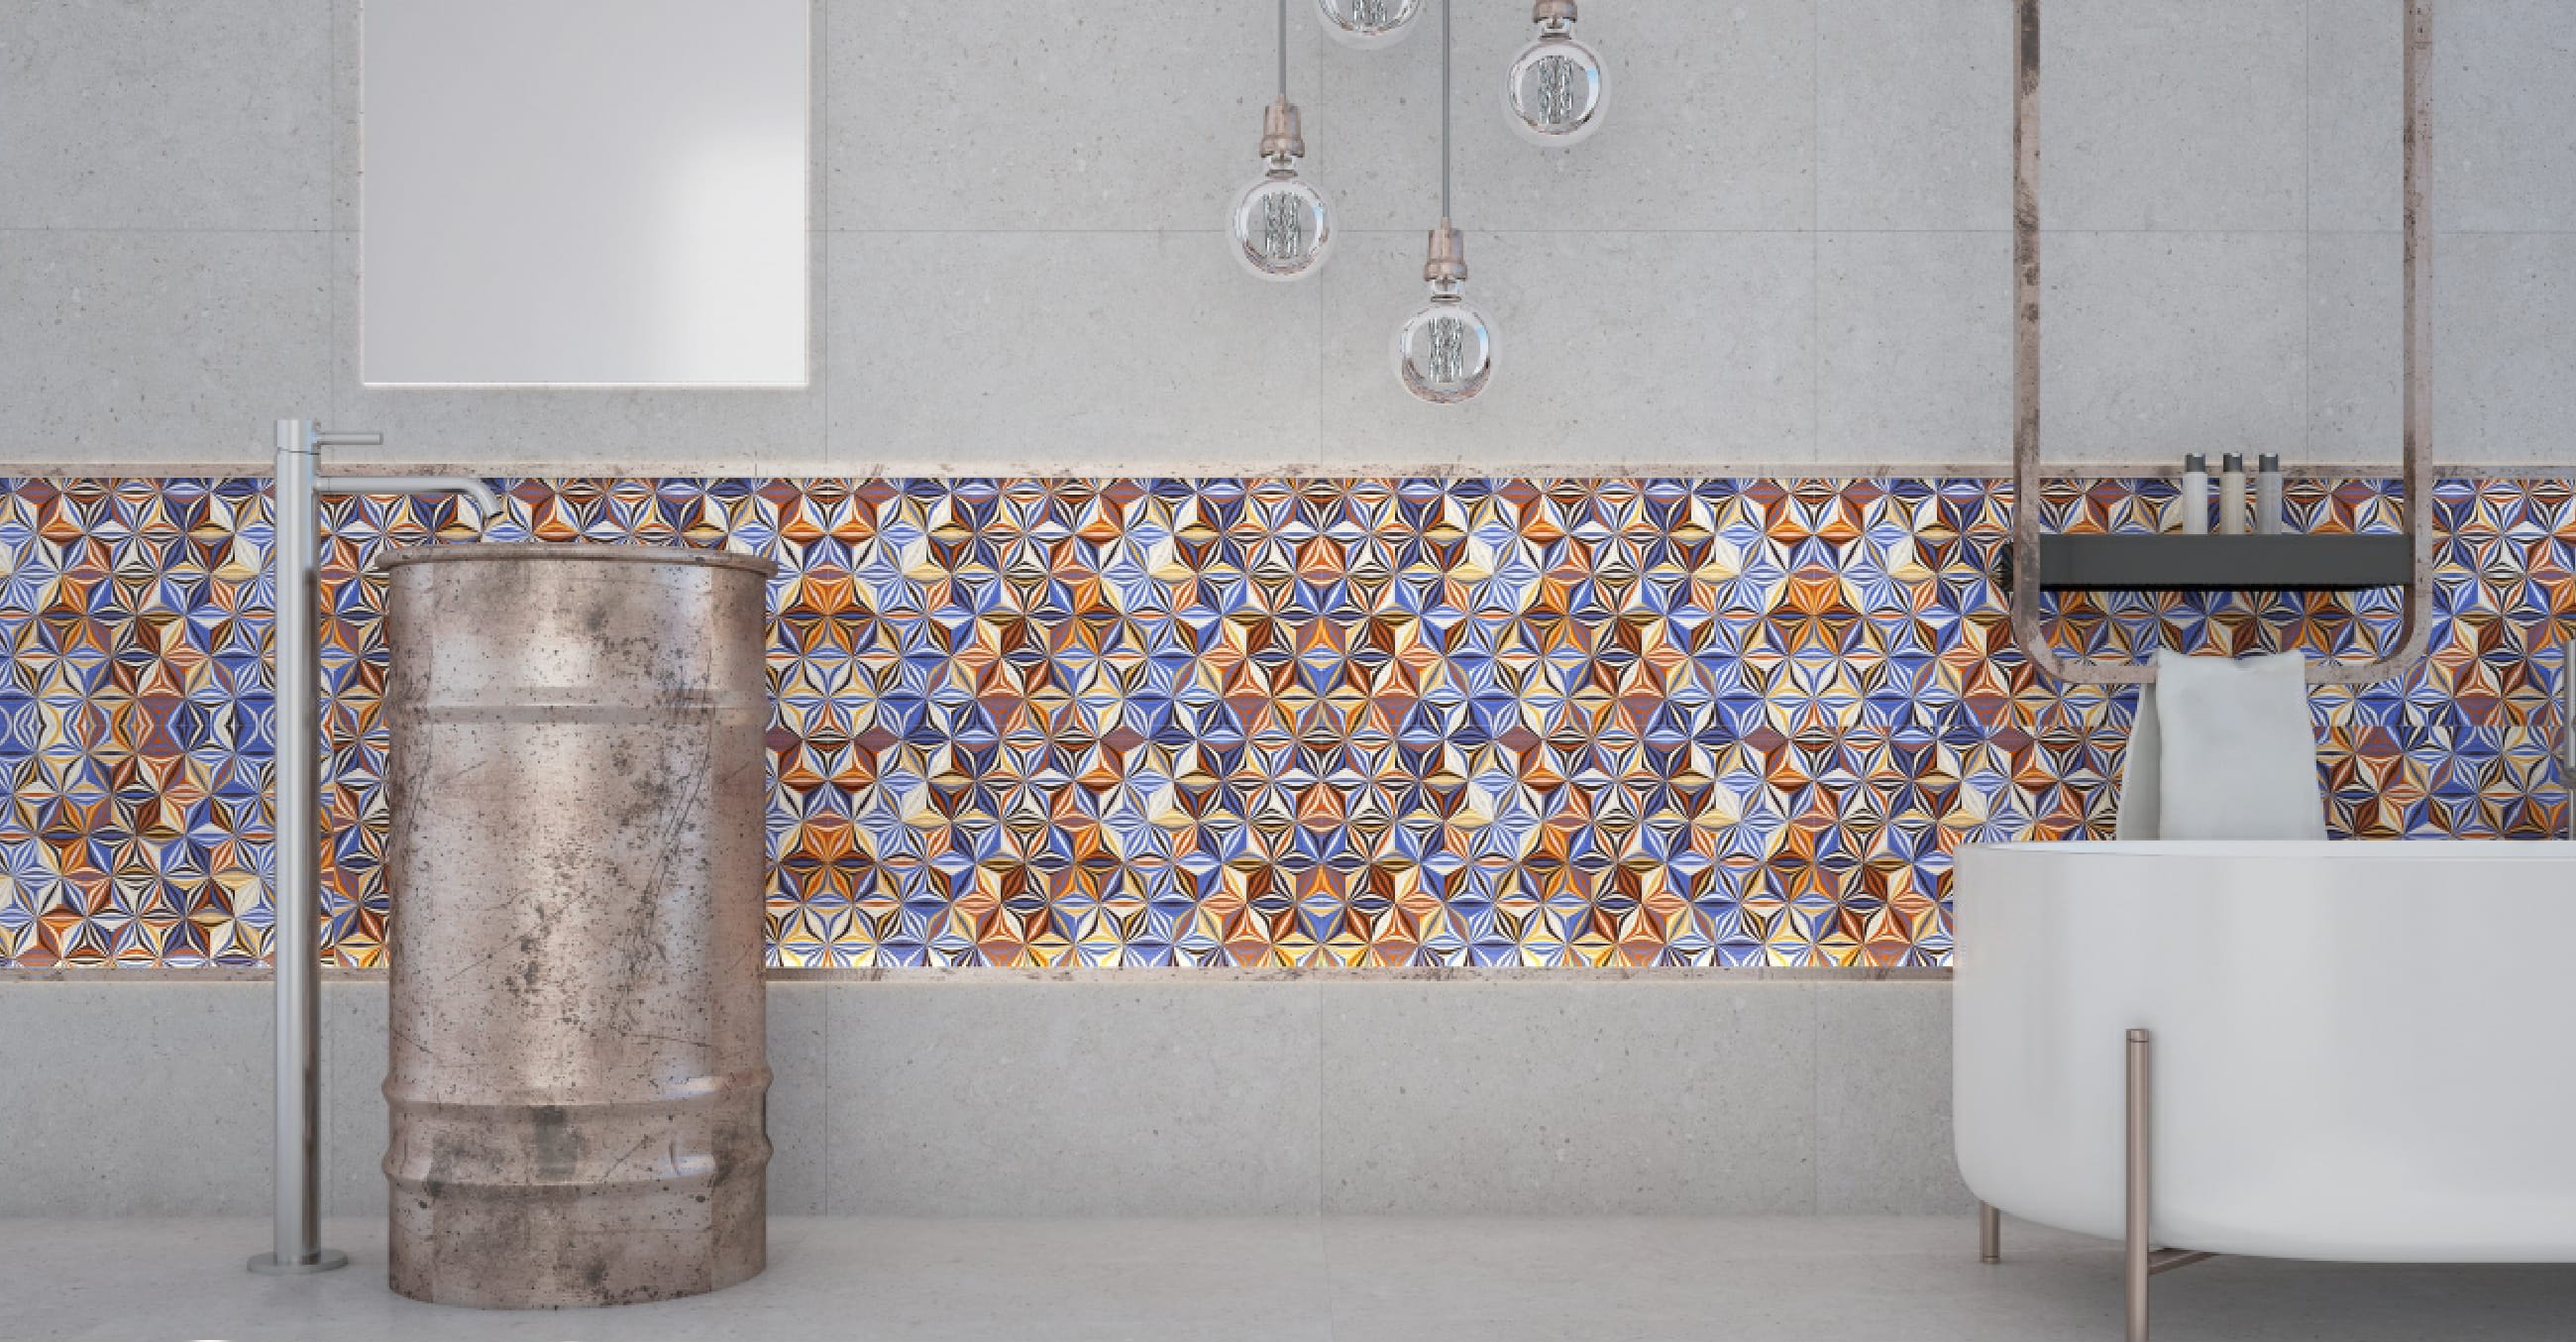 Surefire design ideas to enrich your tiles for your Small Bathroom.